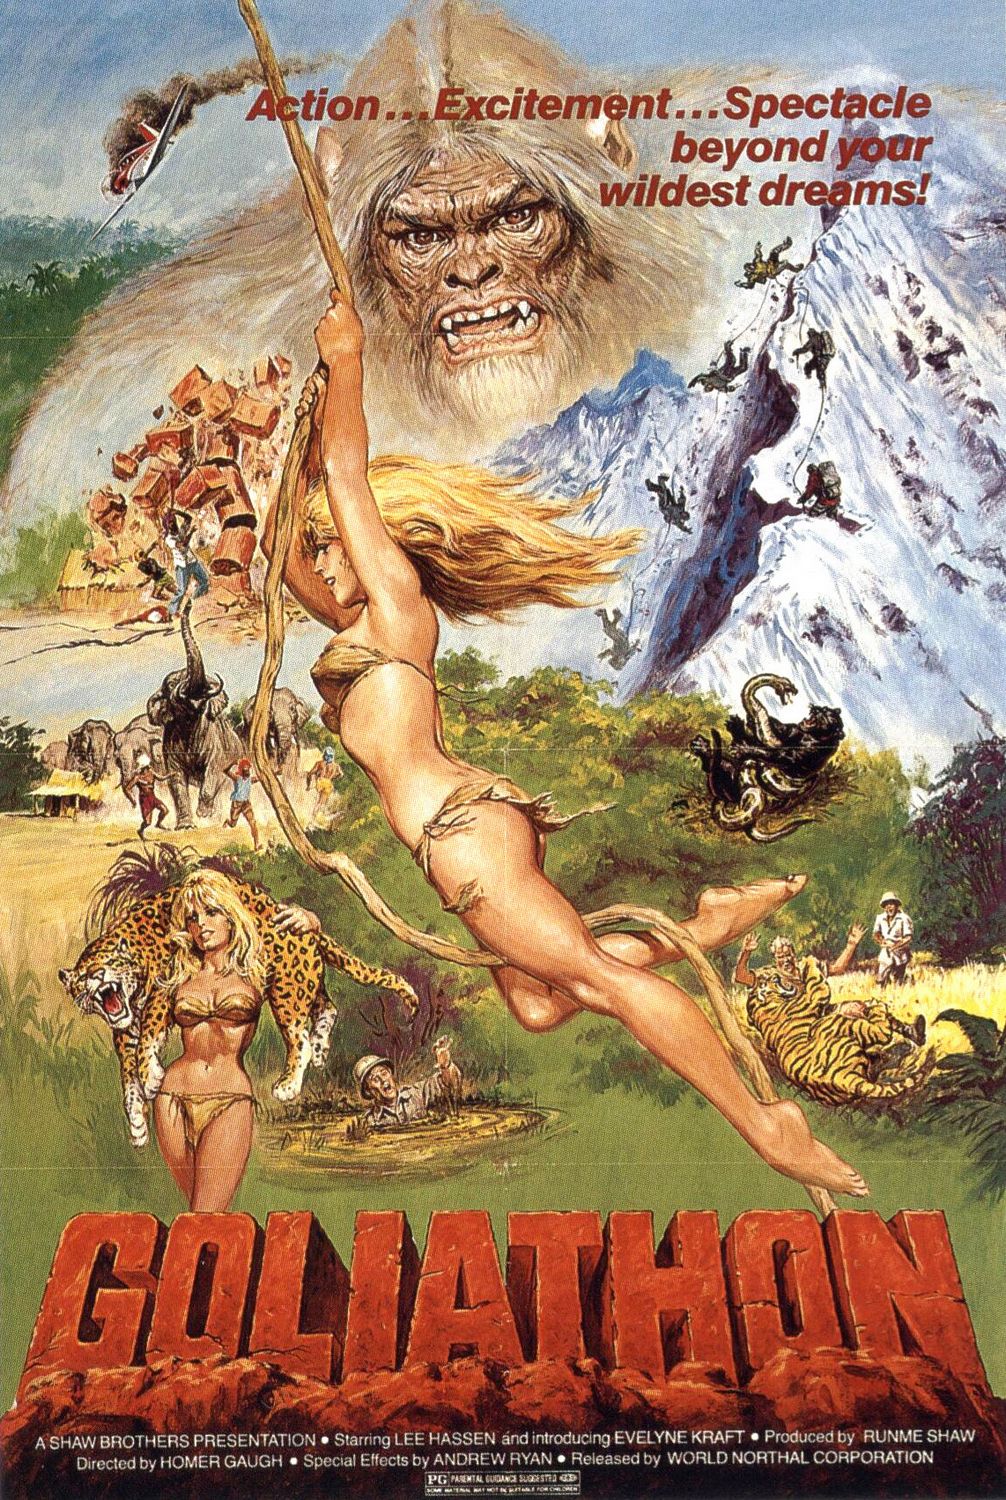 Extra Large Movie Poster Image for Goliathon 